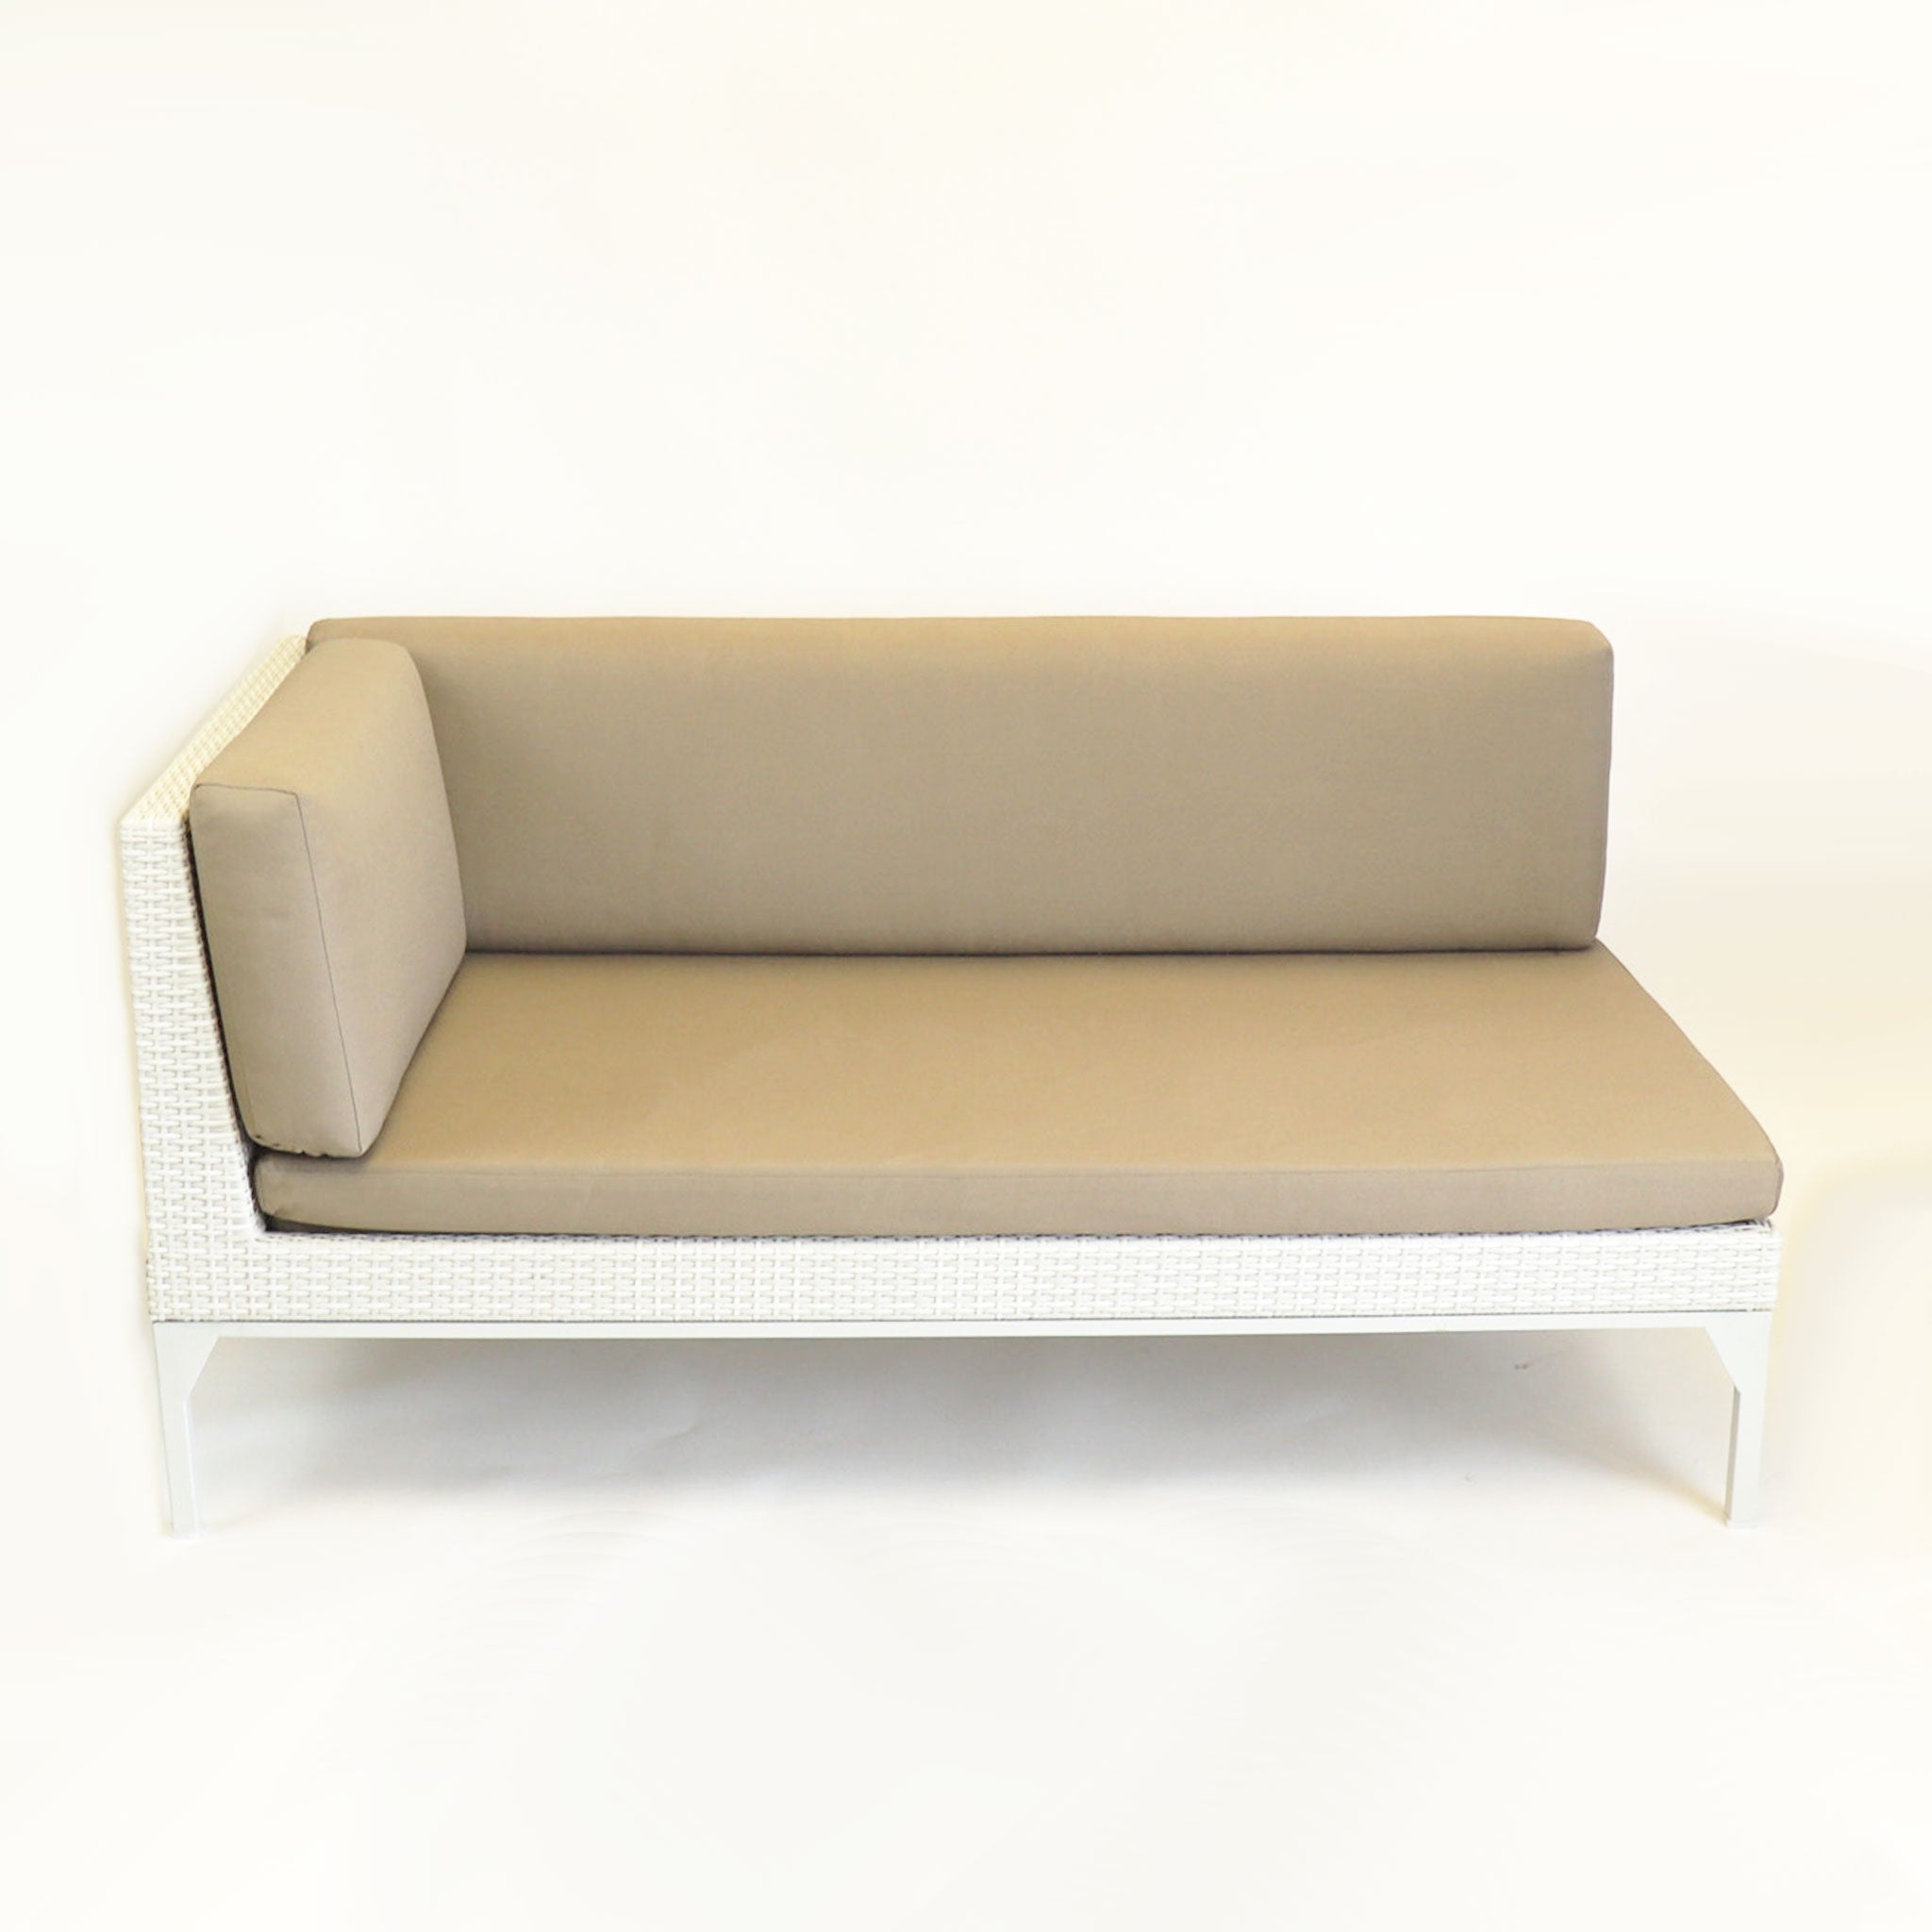 Wicker Deep Seated 'MU' Left or Right Sofa with 'Sunproof' Cushions